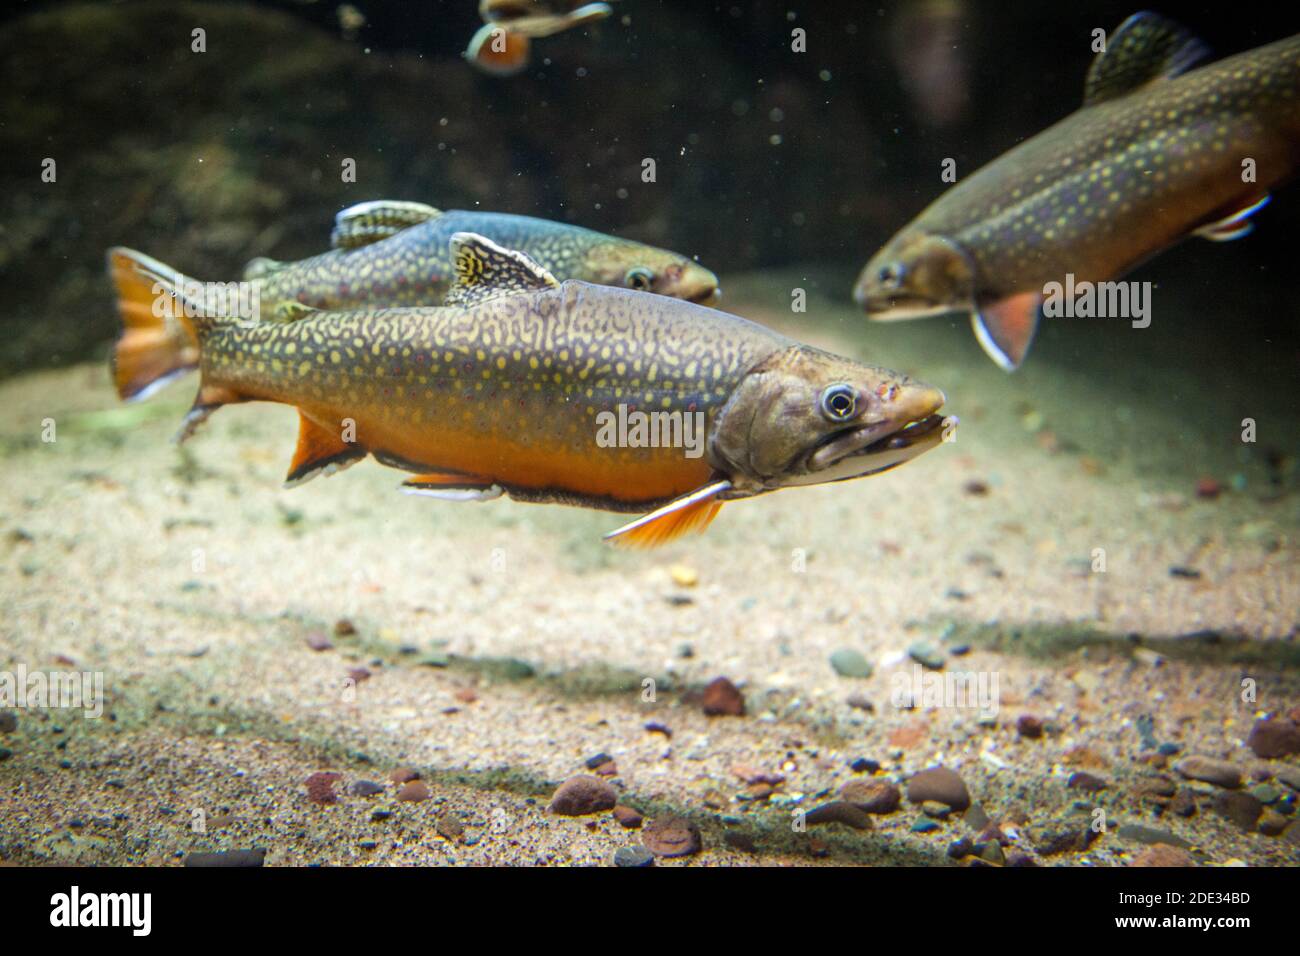 Brook trout (Salvelinus fotinalis) in a aquarium display. Stock Photo